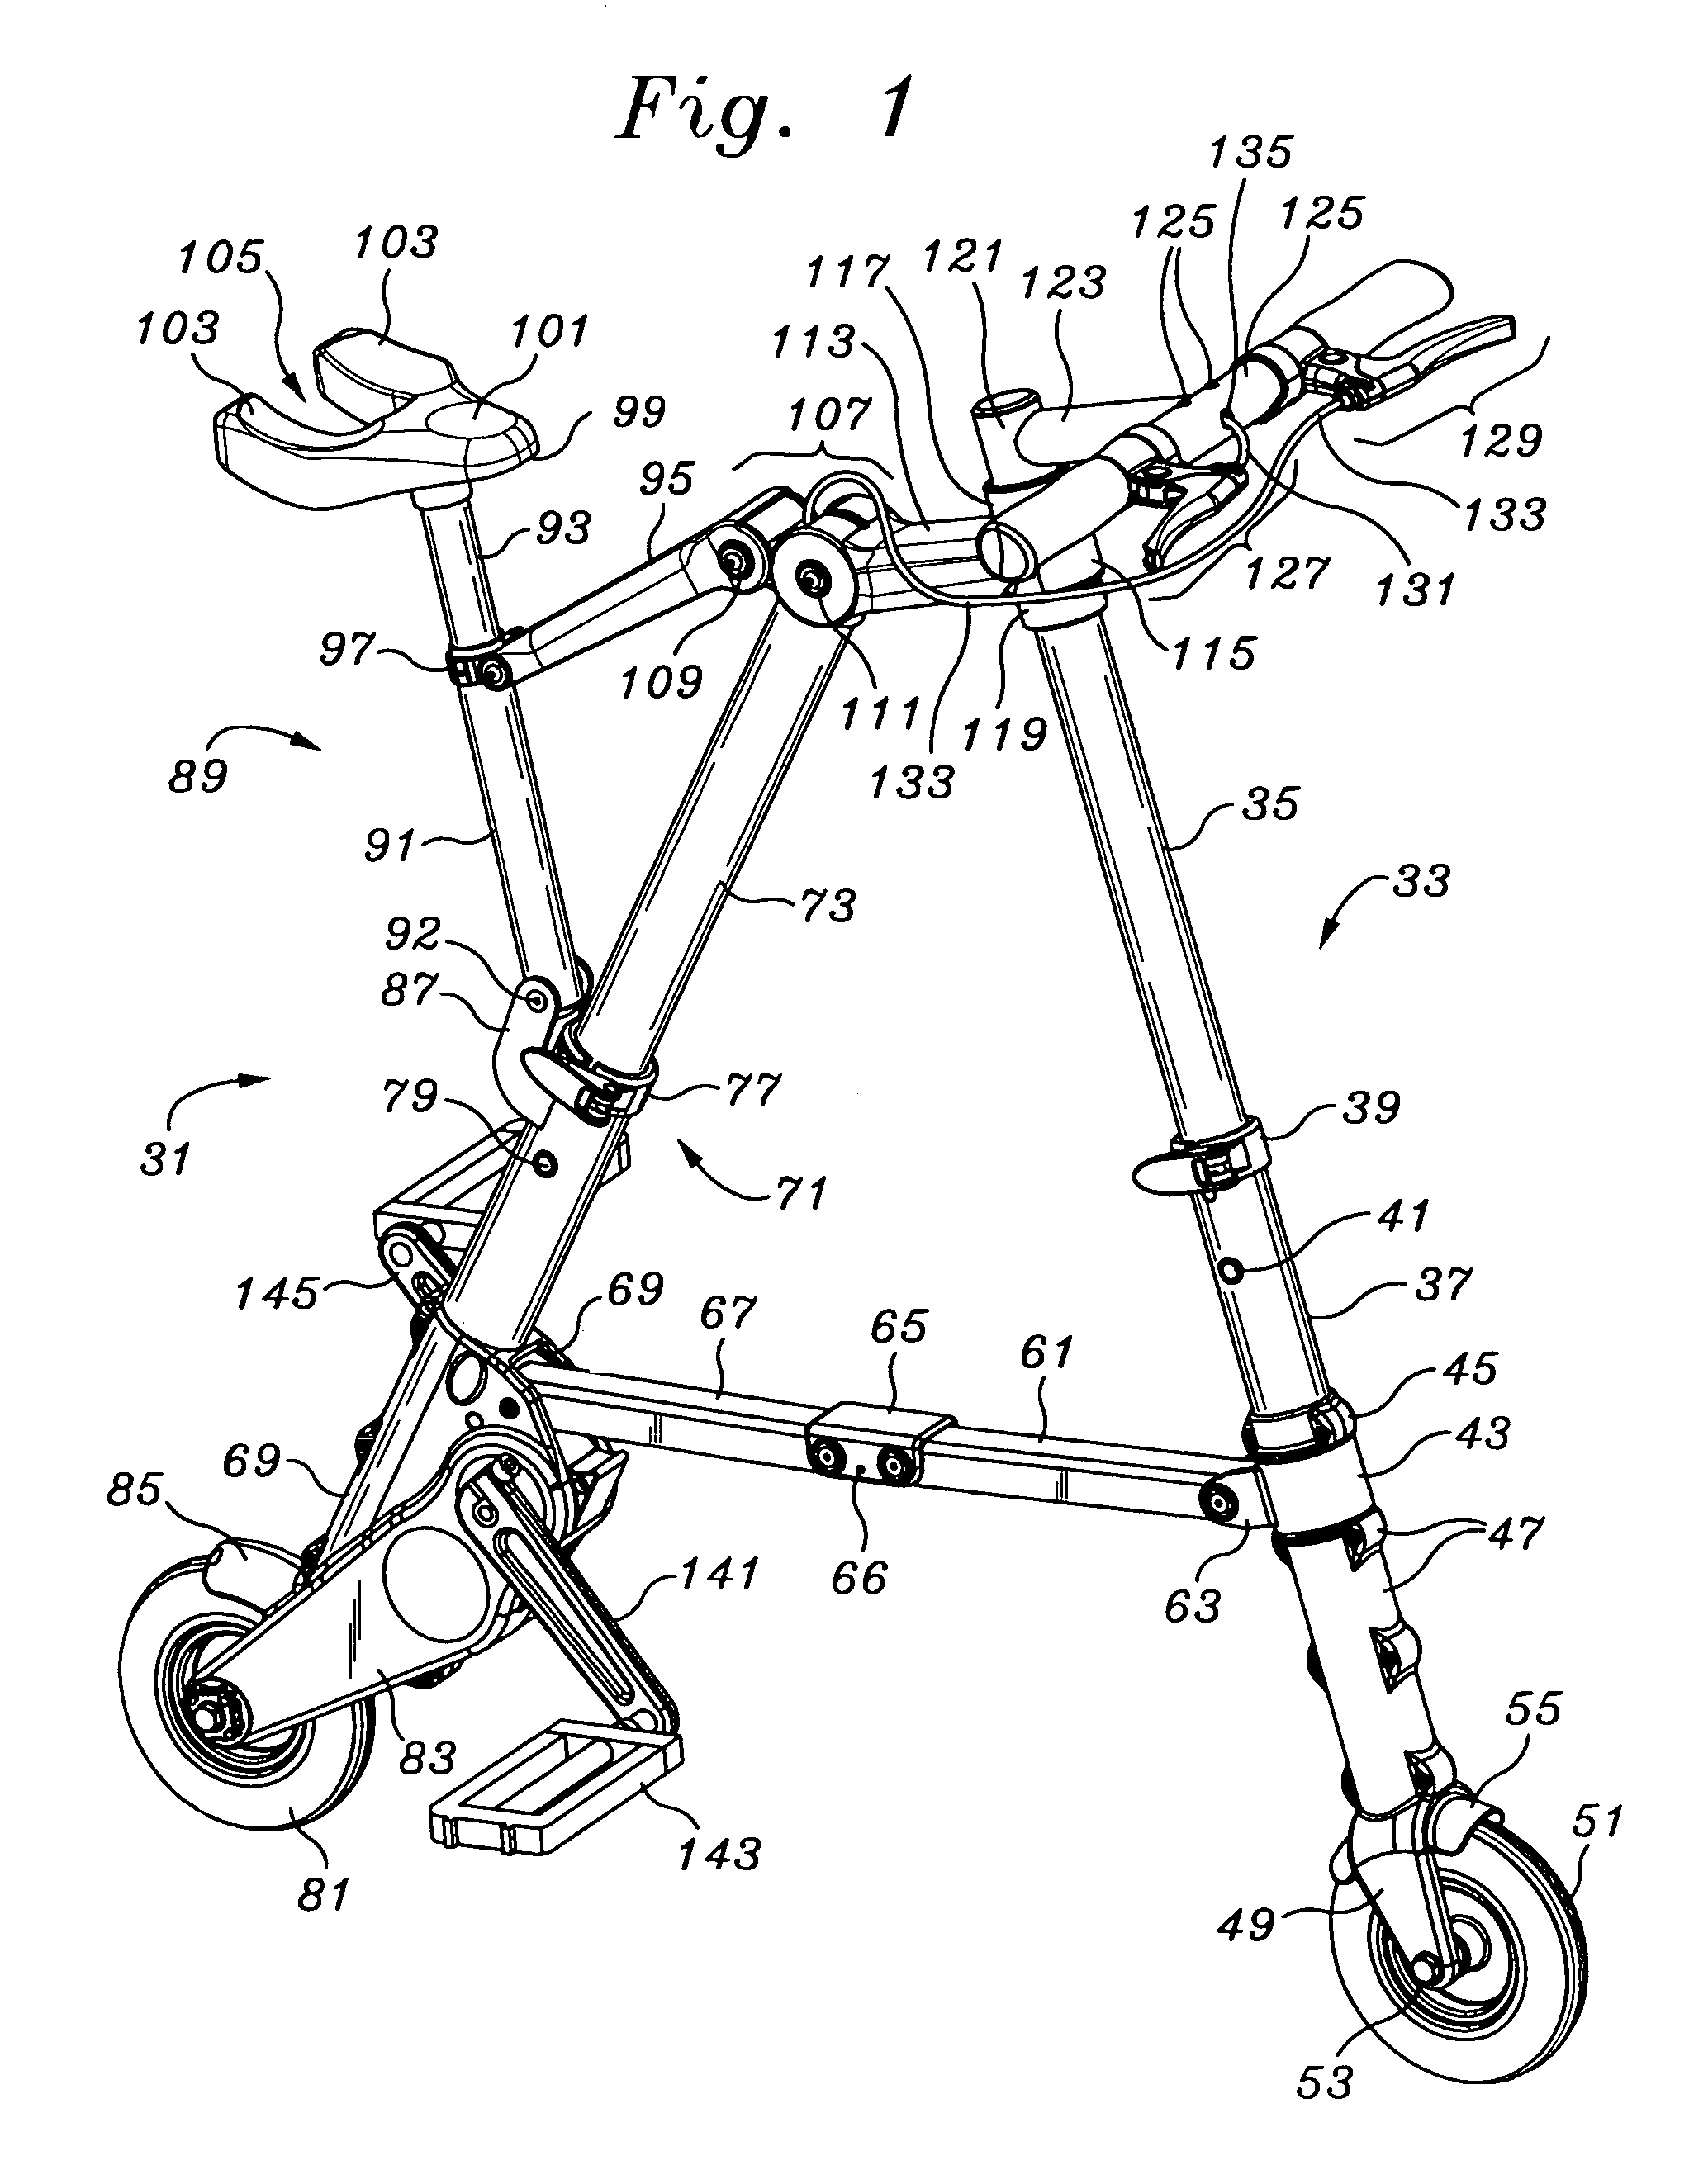 Portable folding bicycle